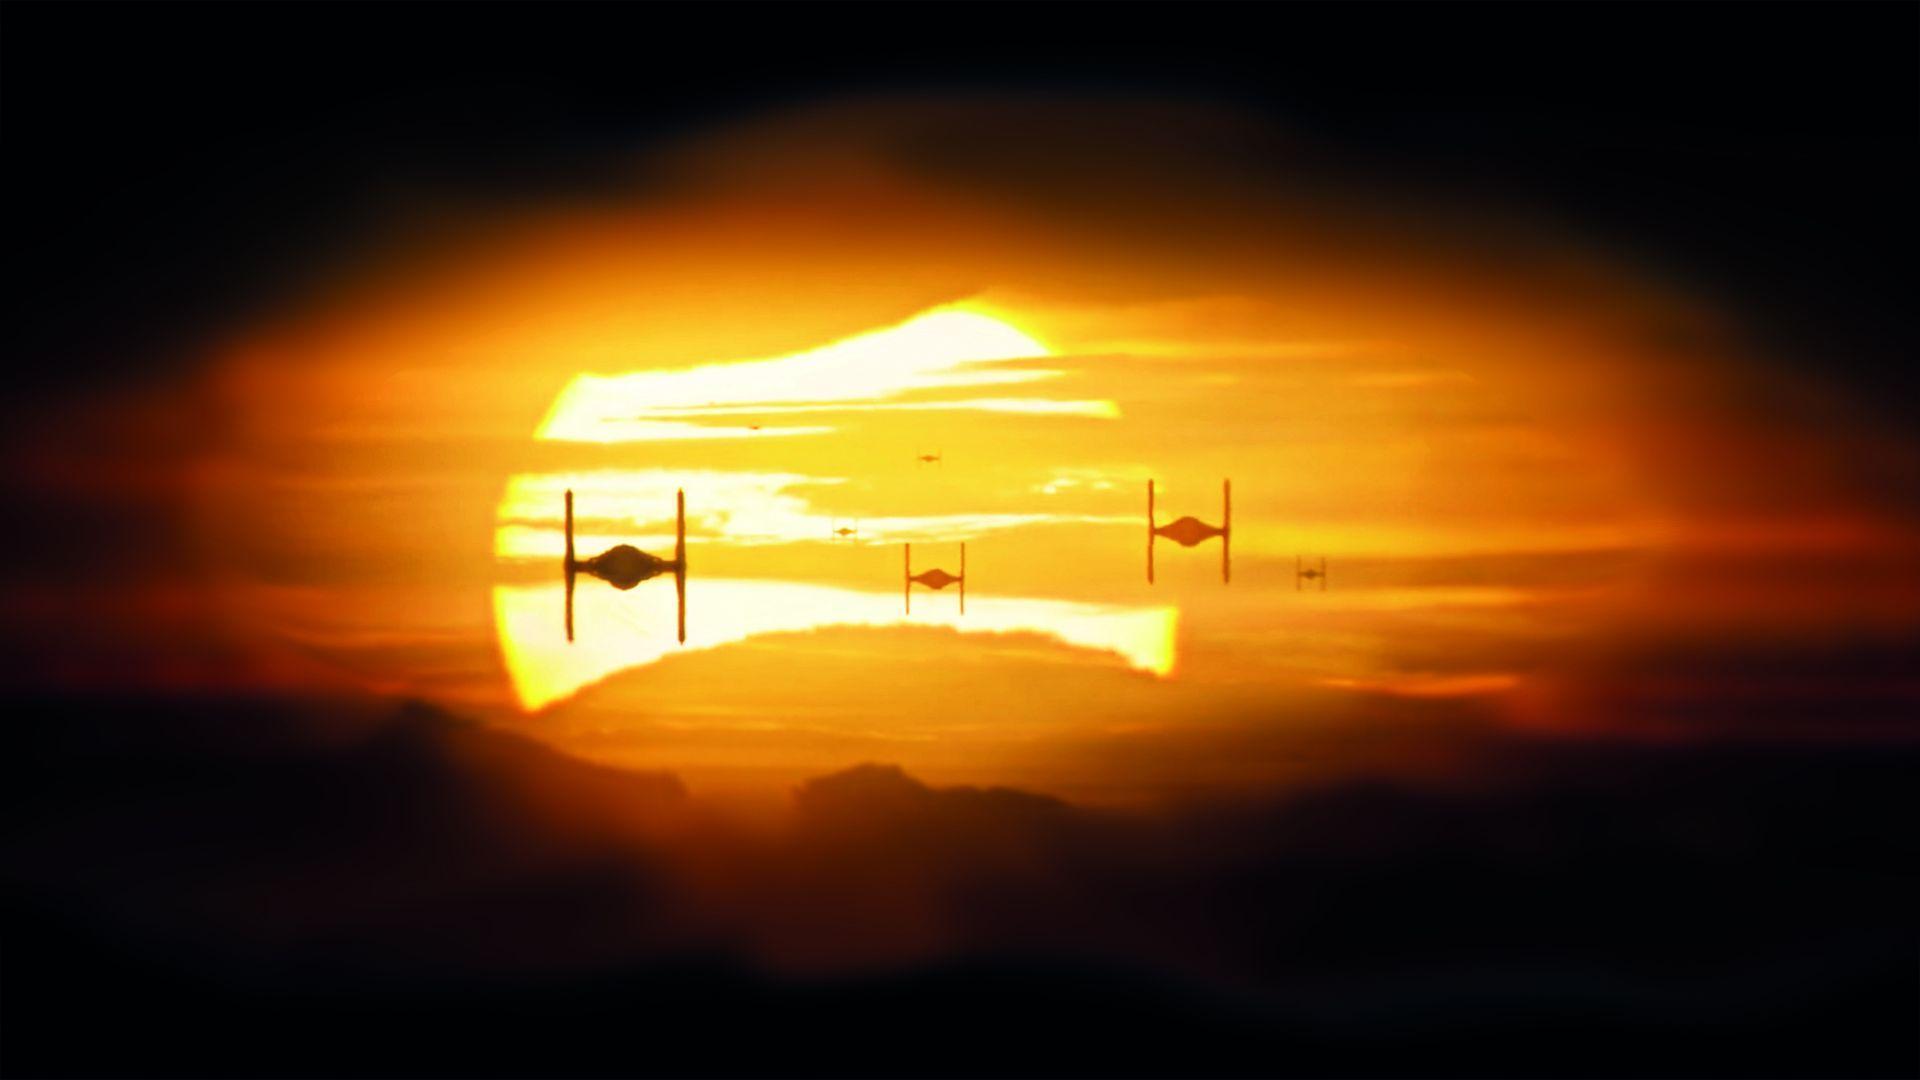 Movie Wallpaper: Star Wars The Force Awakens Wallpaper High